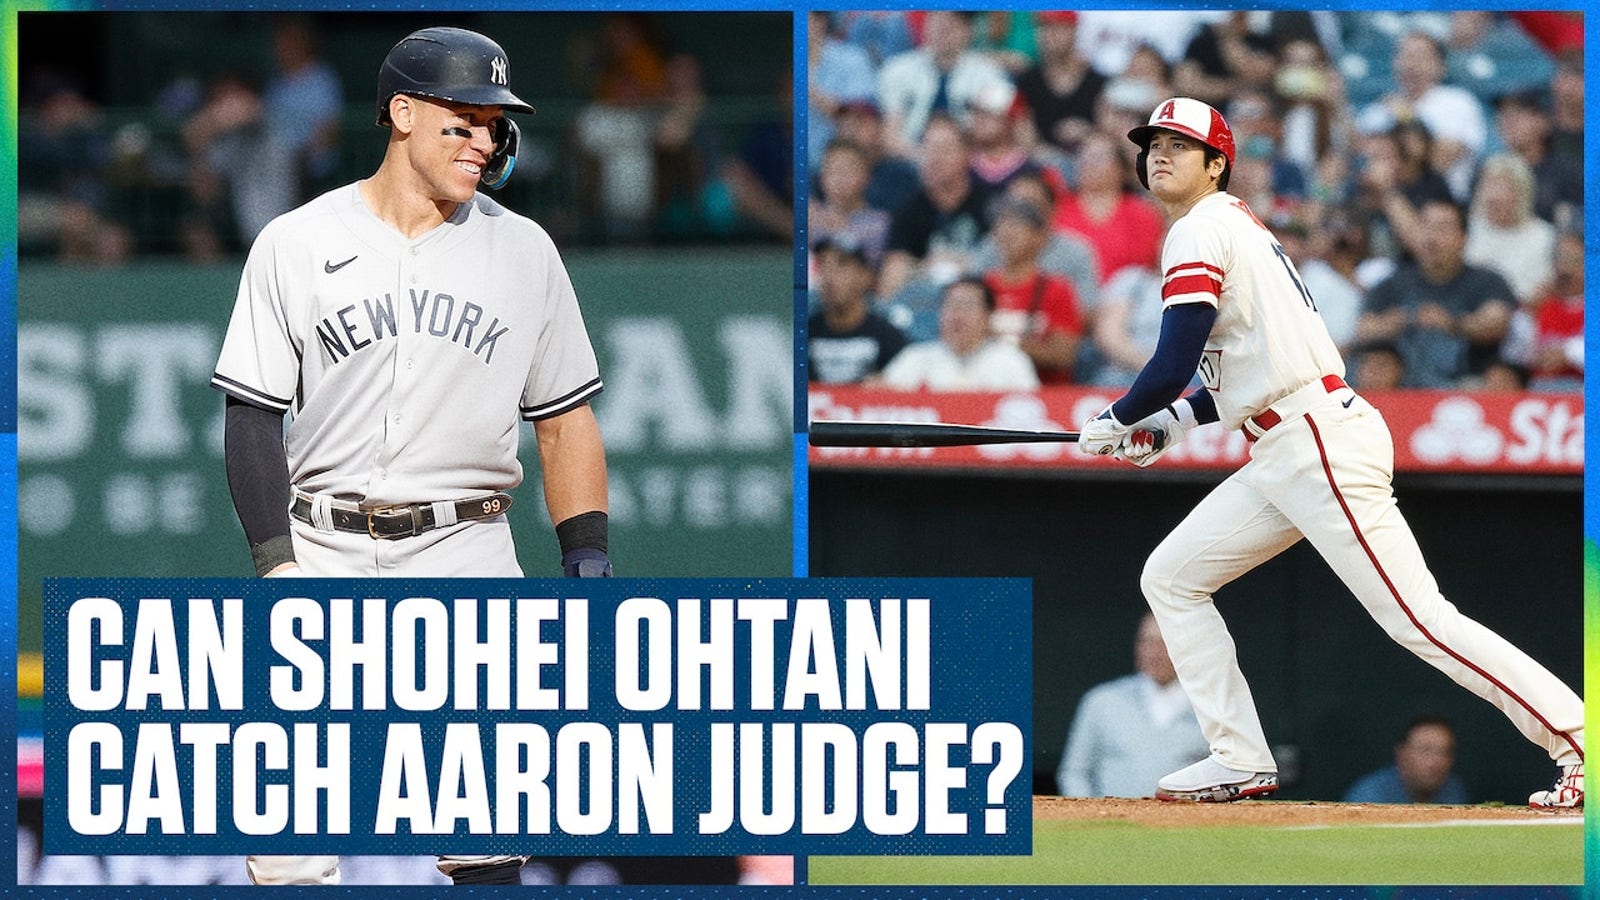 Shohei Ohtani vs Aaron Judge: The AL MVP debate